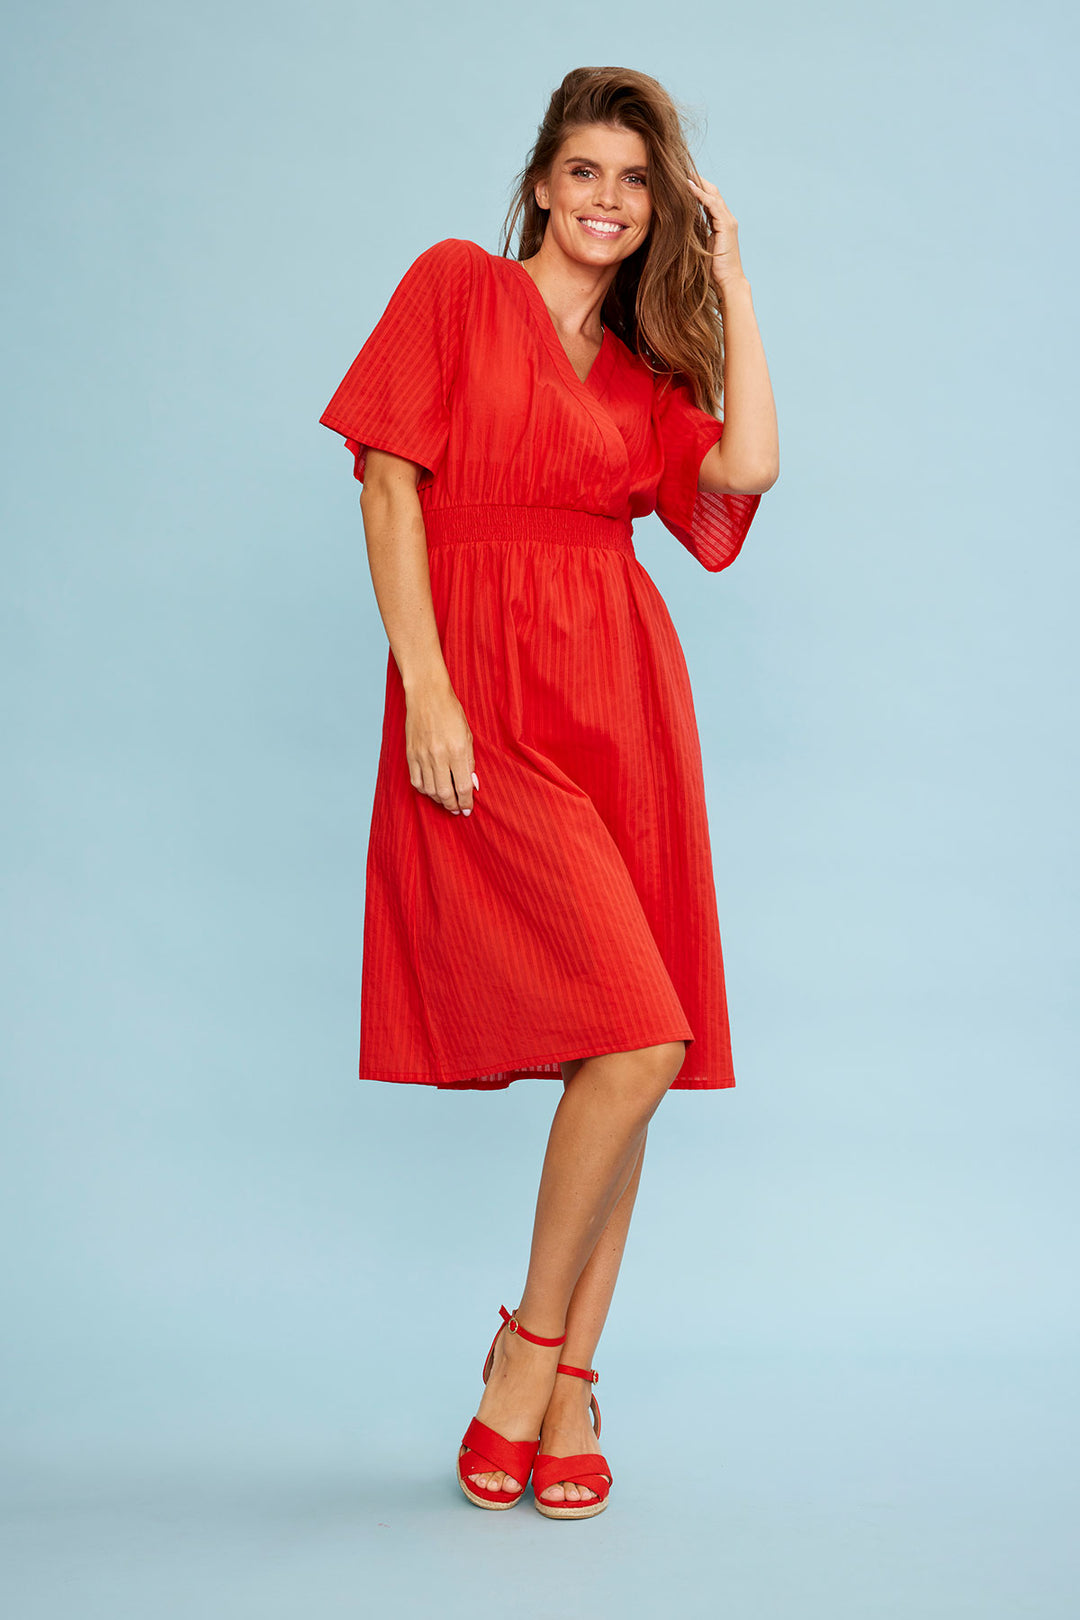 Faisa 164 - Red A-line Dress: Timeless Design with Elegant Finish| ZE-ZE